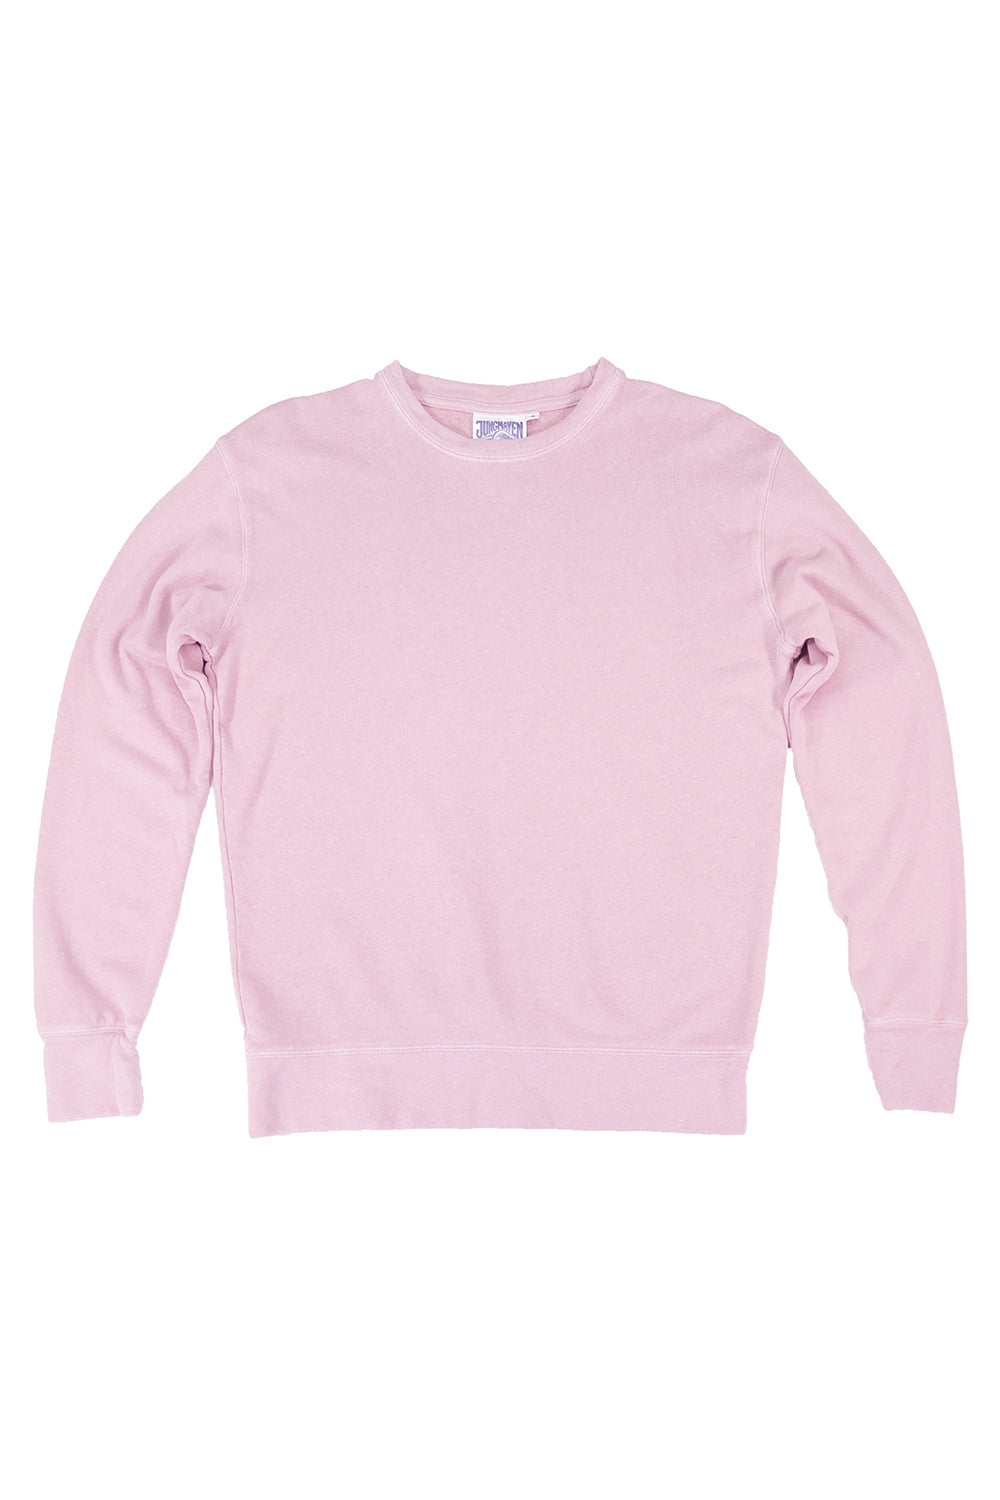 Tahoe Sweatshirt | Jungmaven Hemp Clothing & Accessories / Color: Rose Quartz